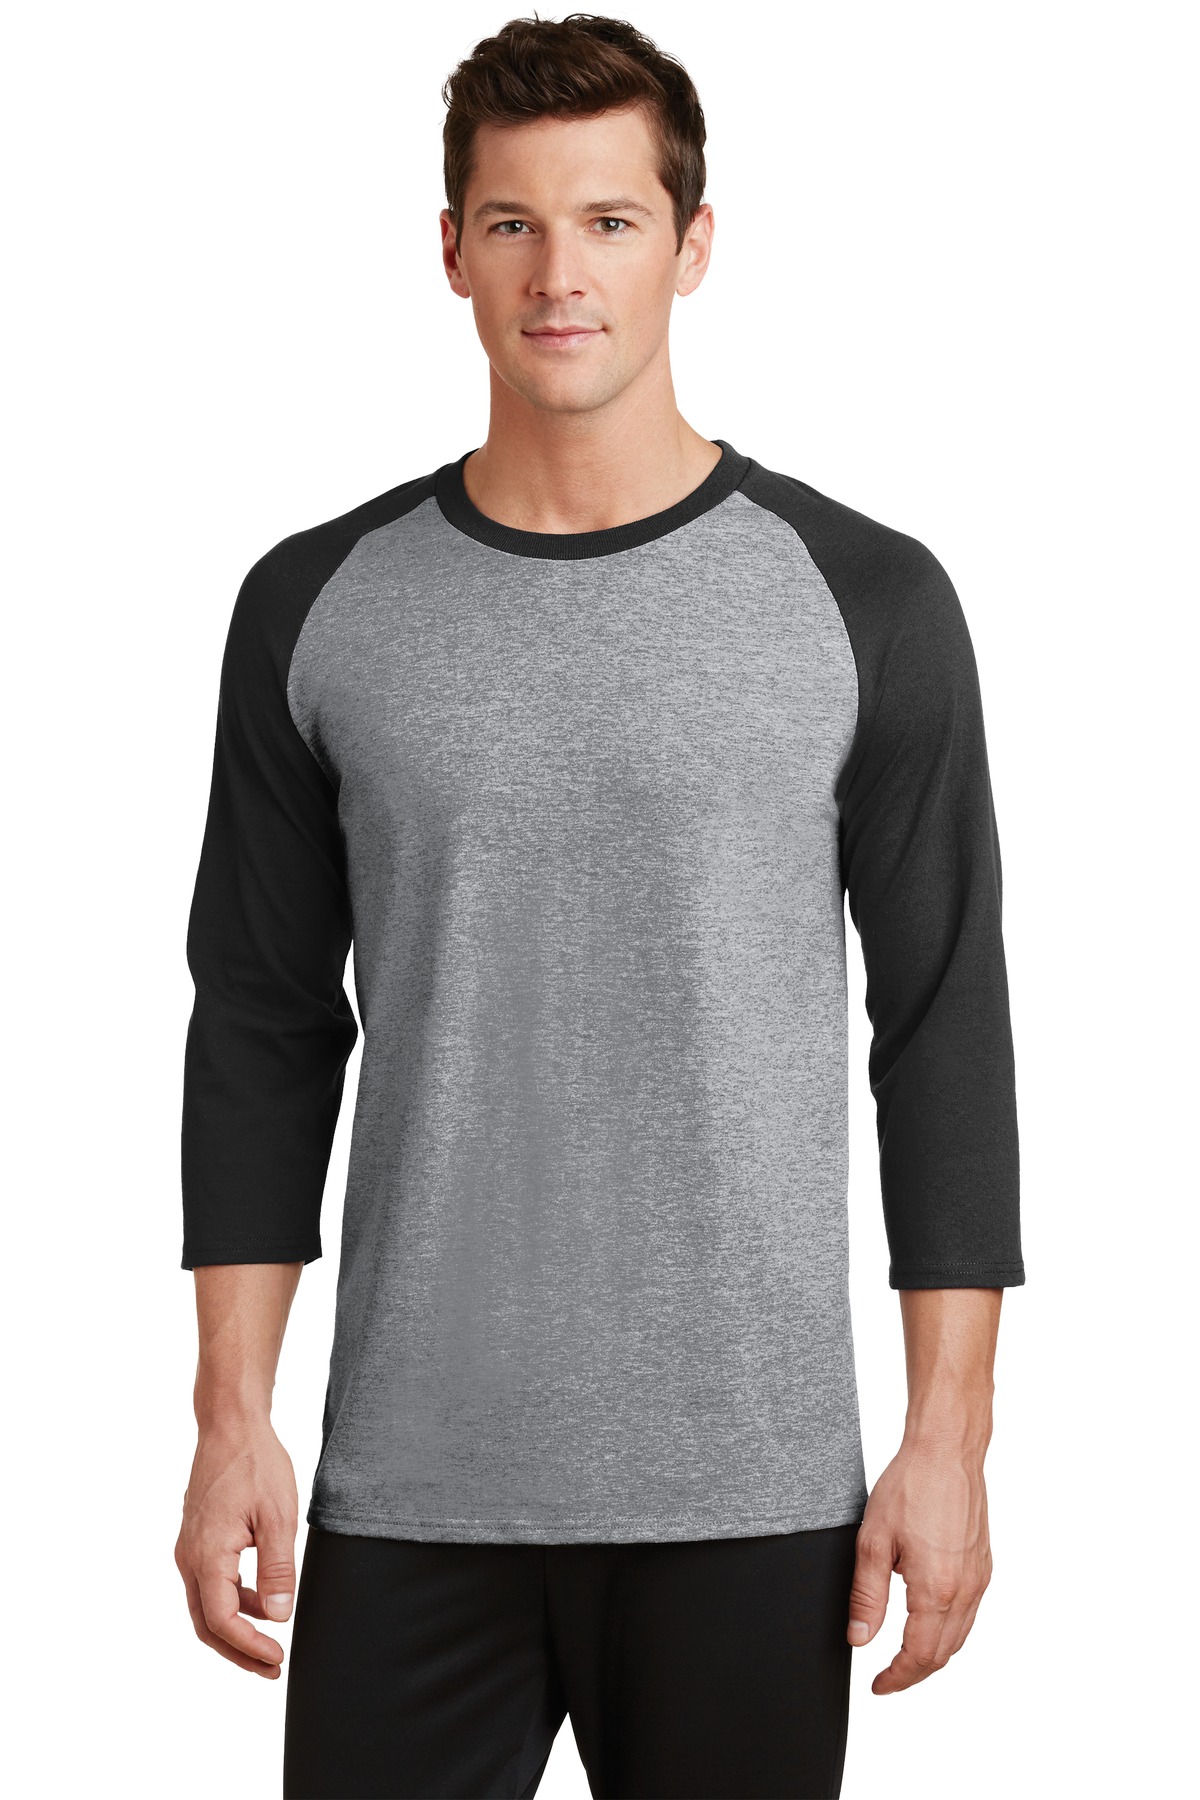 Port & Company Hospitality T-Shirts ® Core Blend 3/4-Sleeve Raglan Tee.-Port & Company